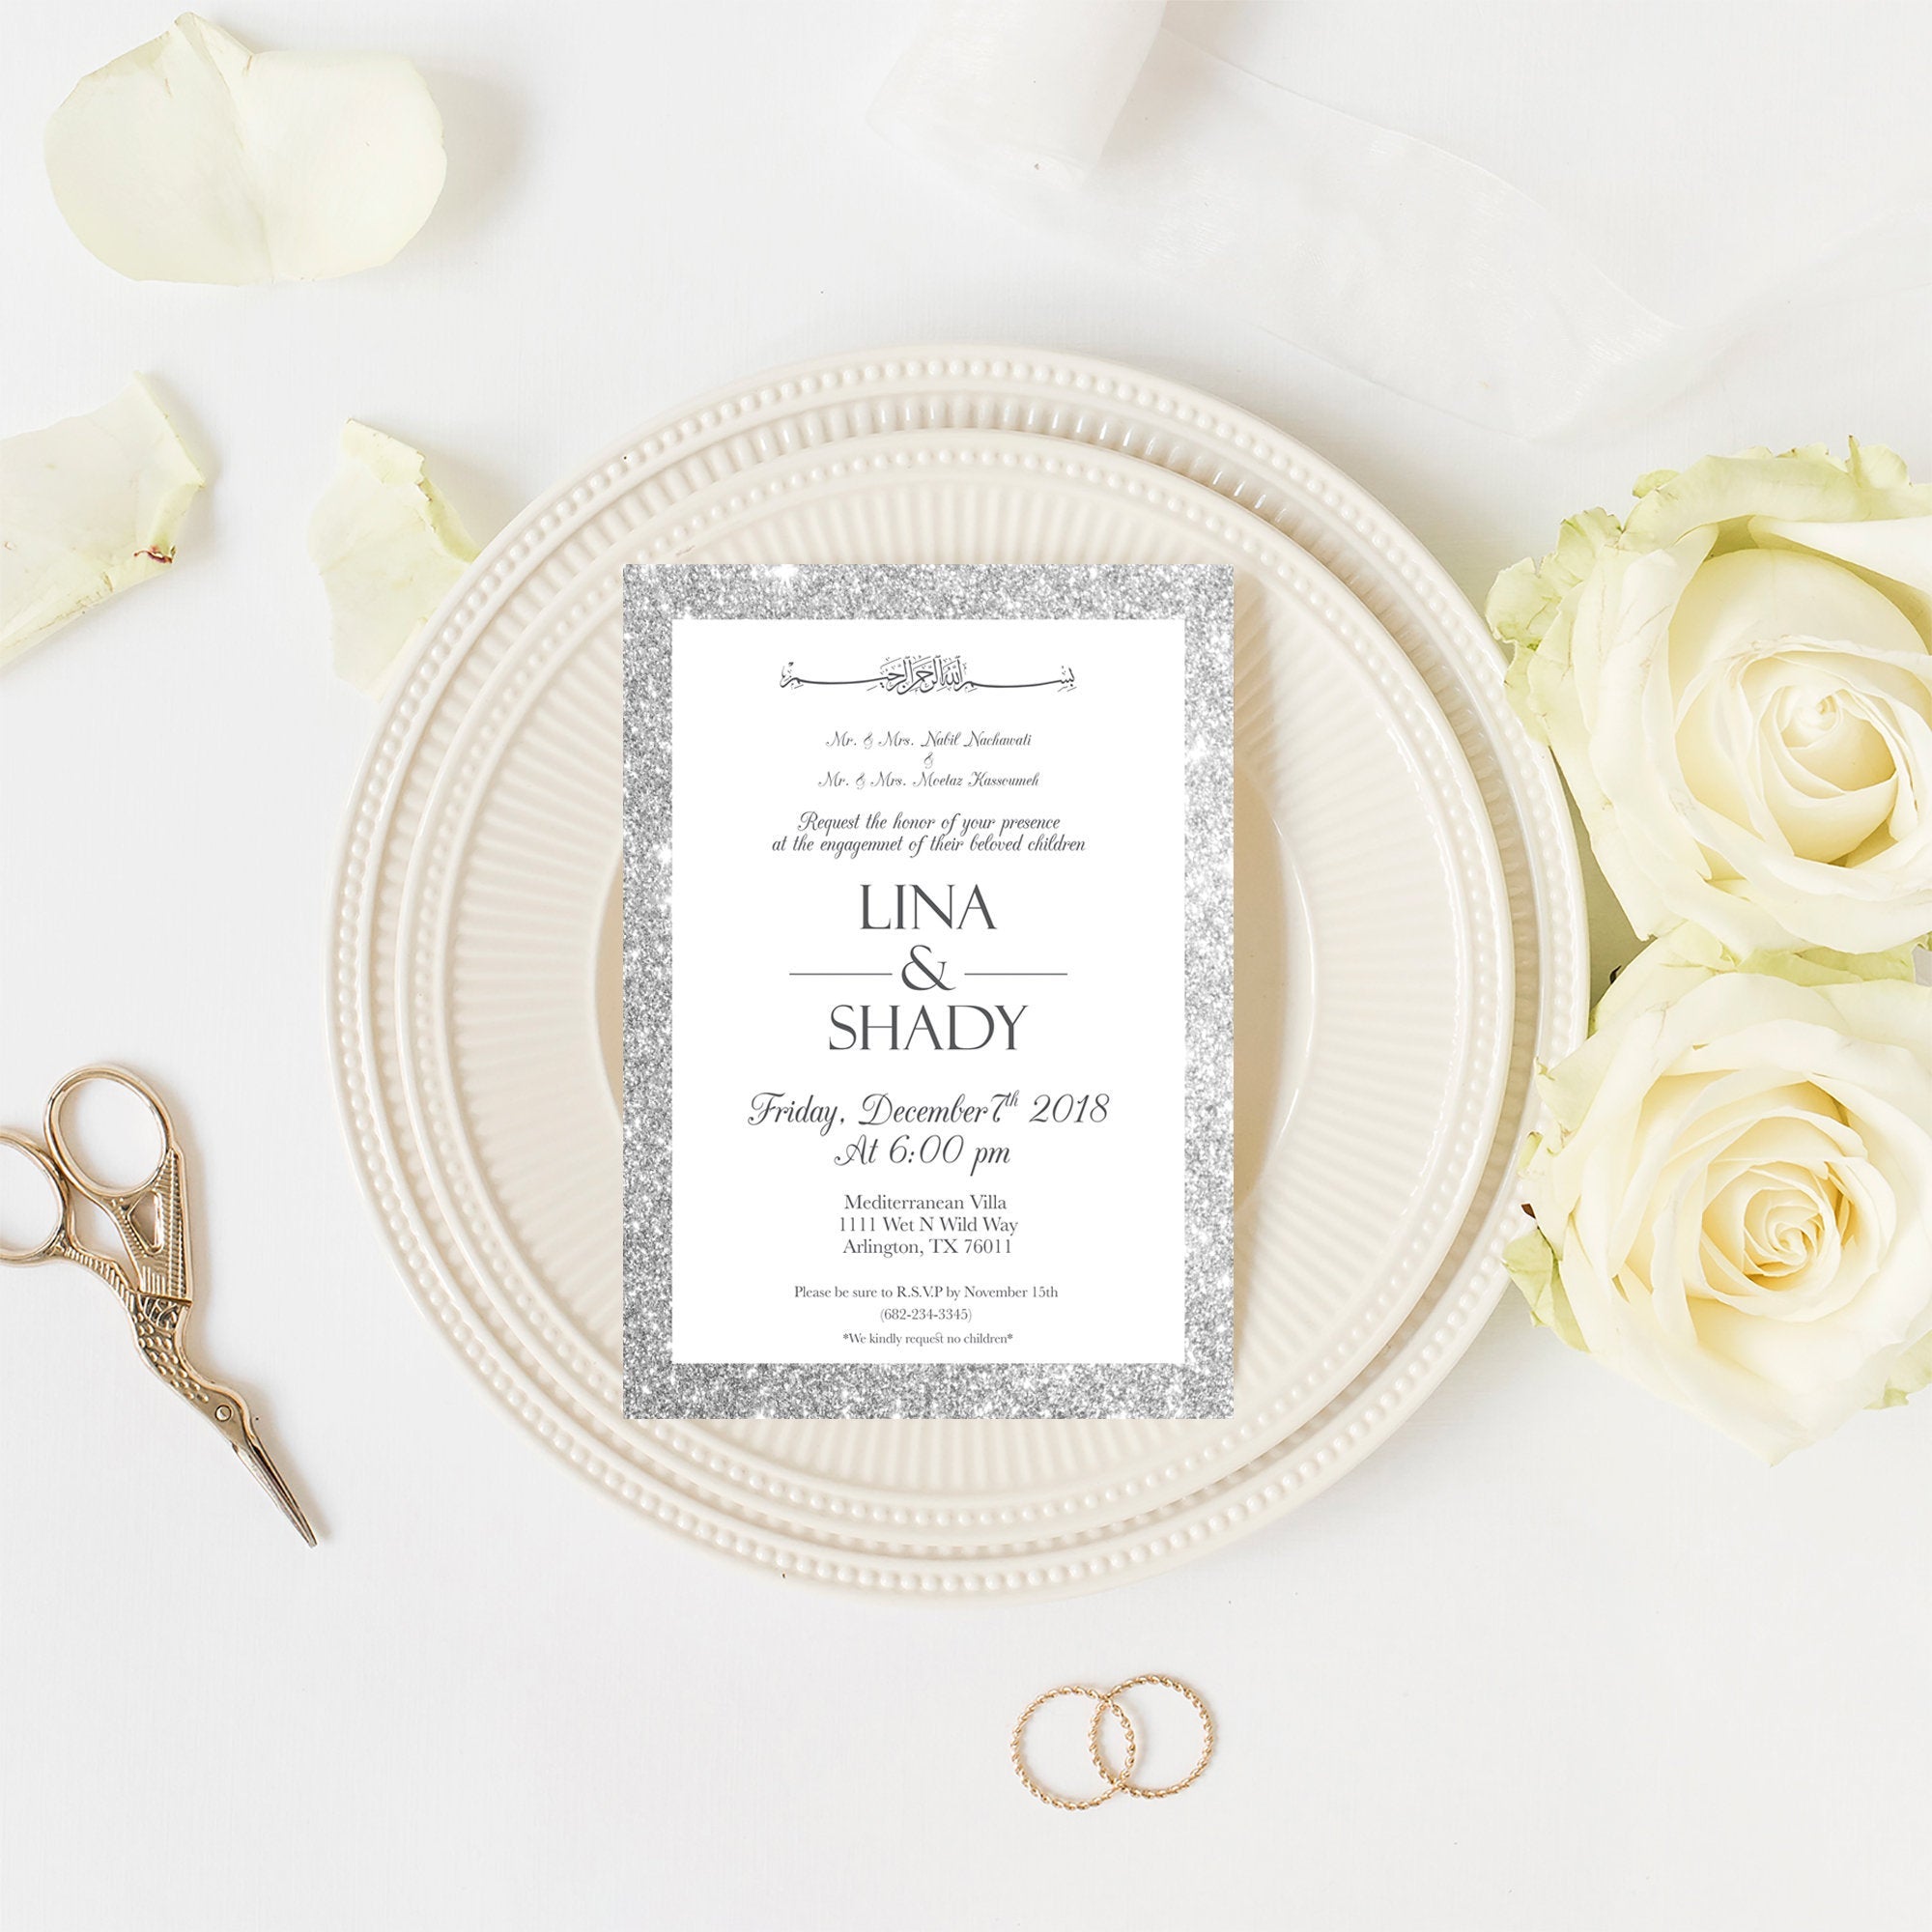 Muslim Wedding Invitations - glitter Custom Arabic Invitation -Arabic and English Wedding invitation - Nikkah invitation - bilingual - Print